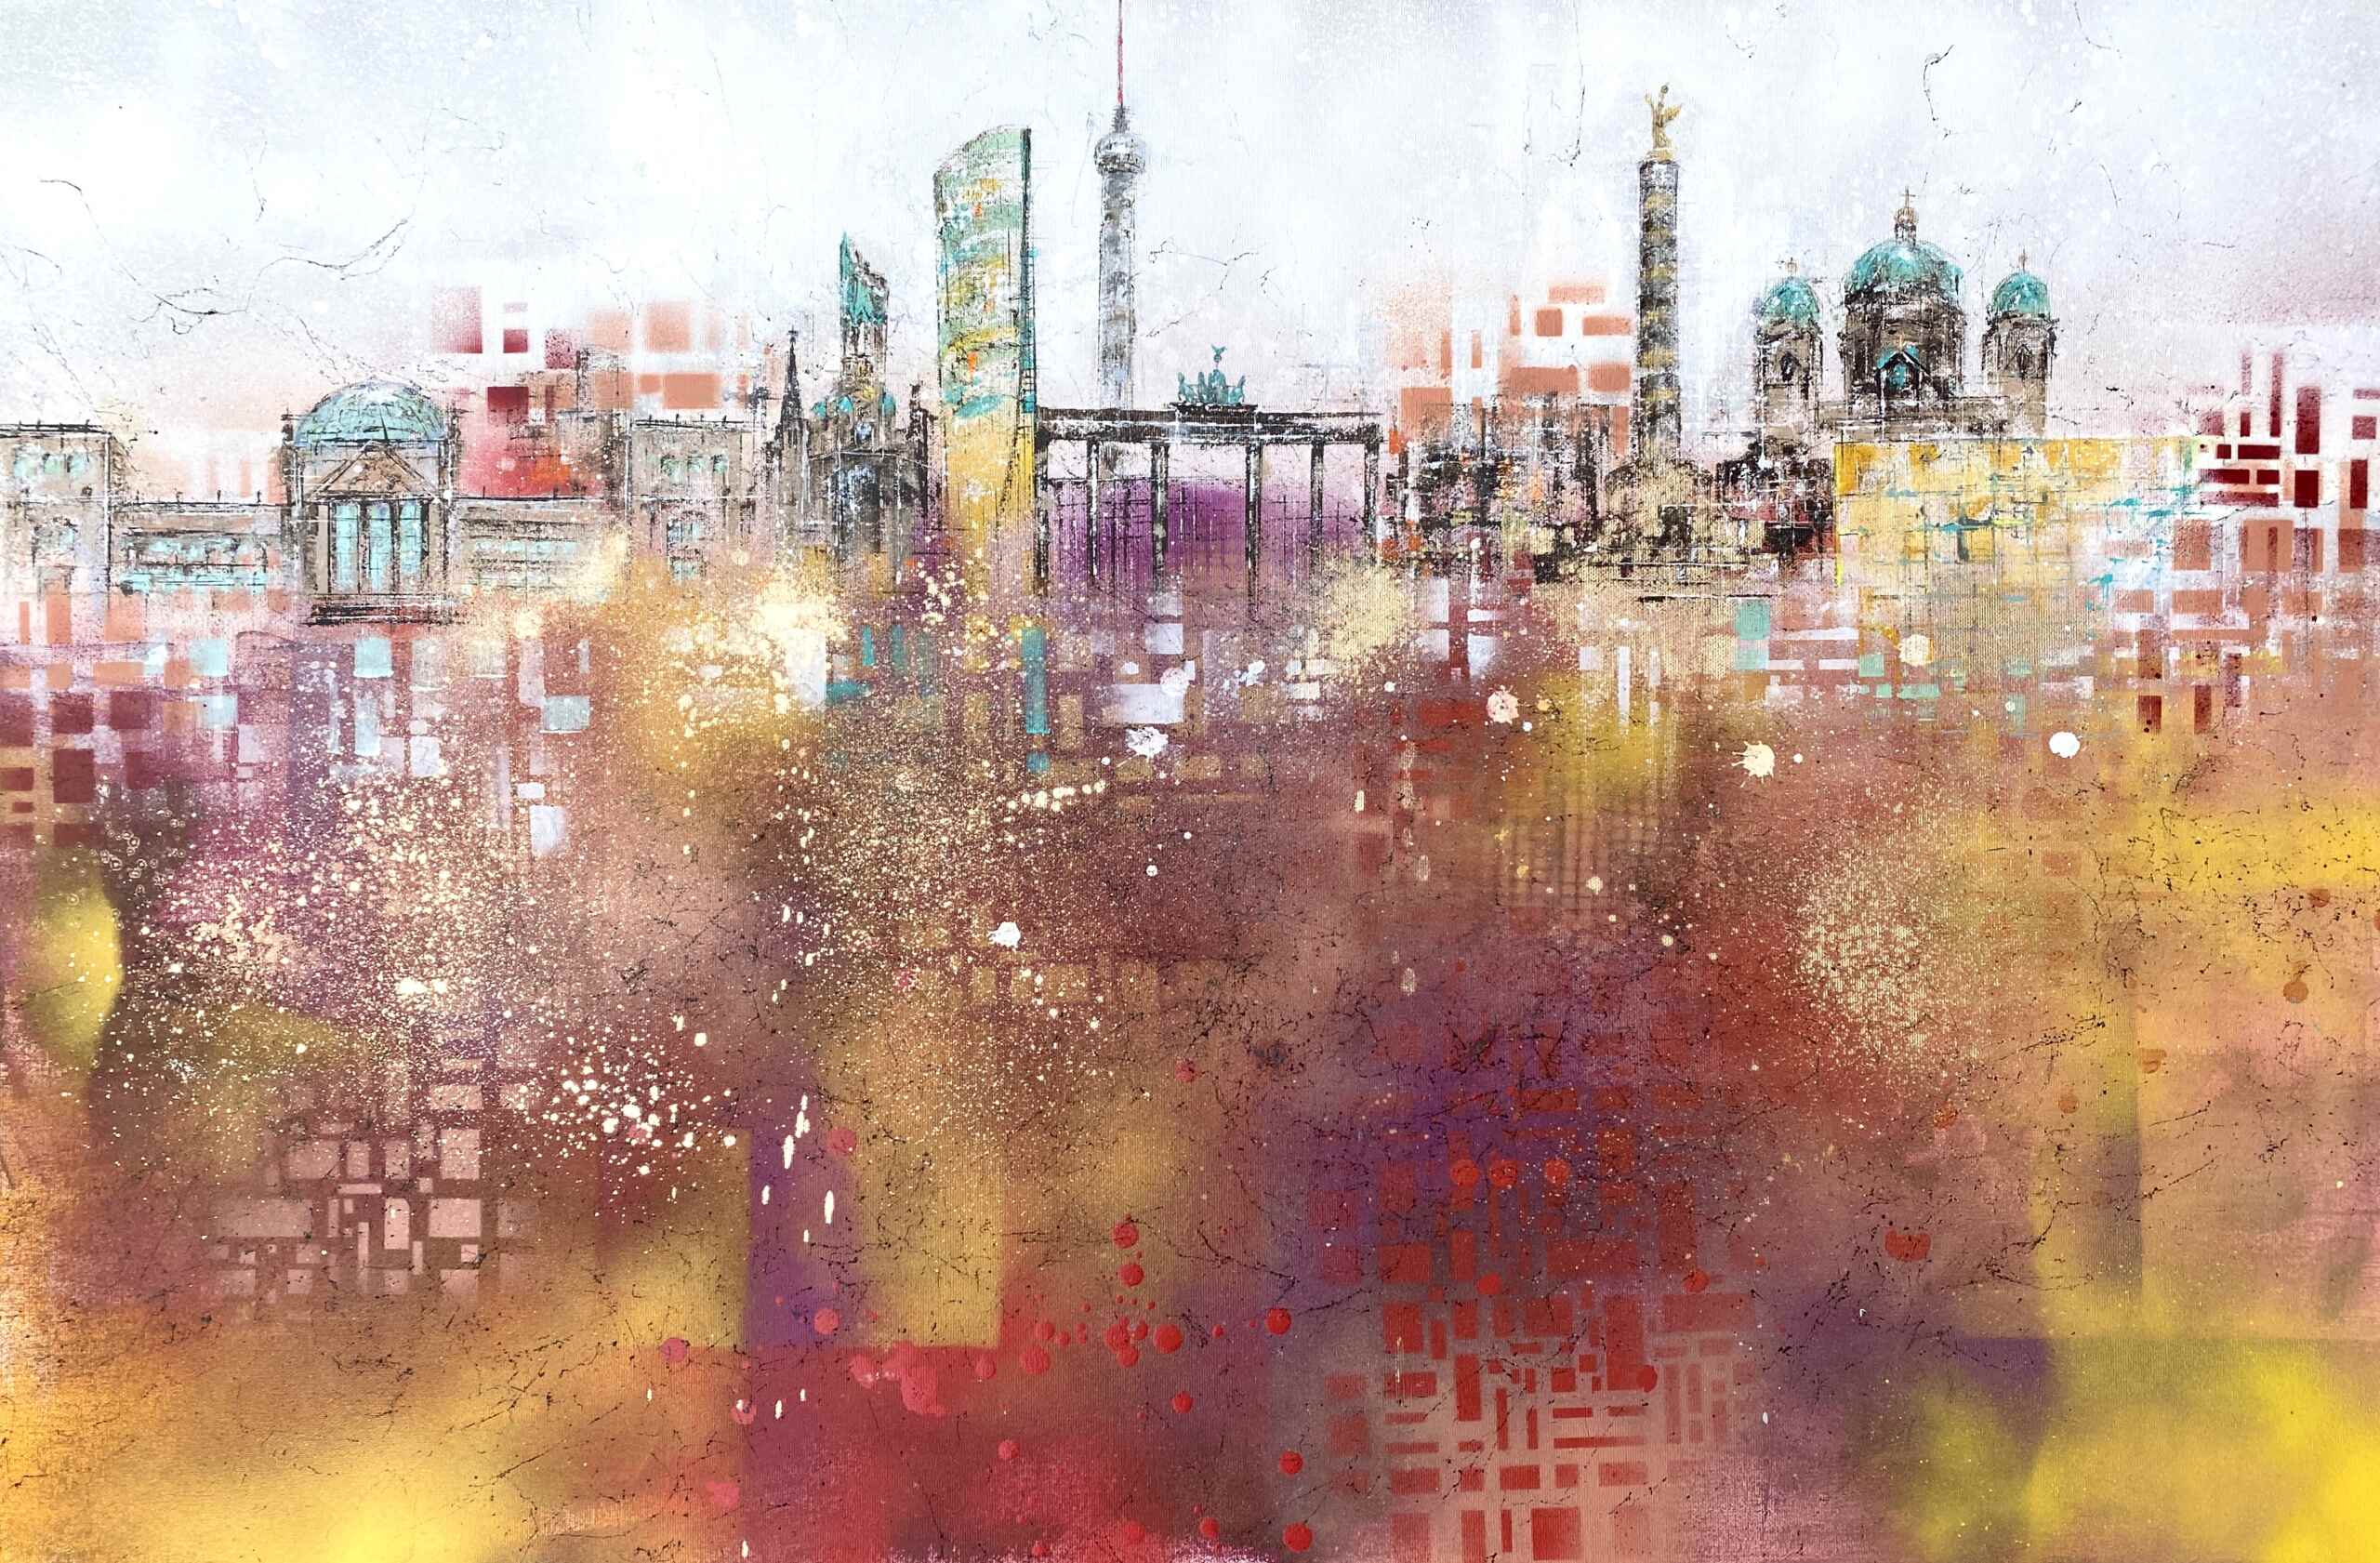 Artwork "Berlin No 1" by Nina Groth